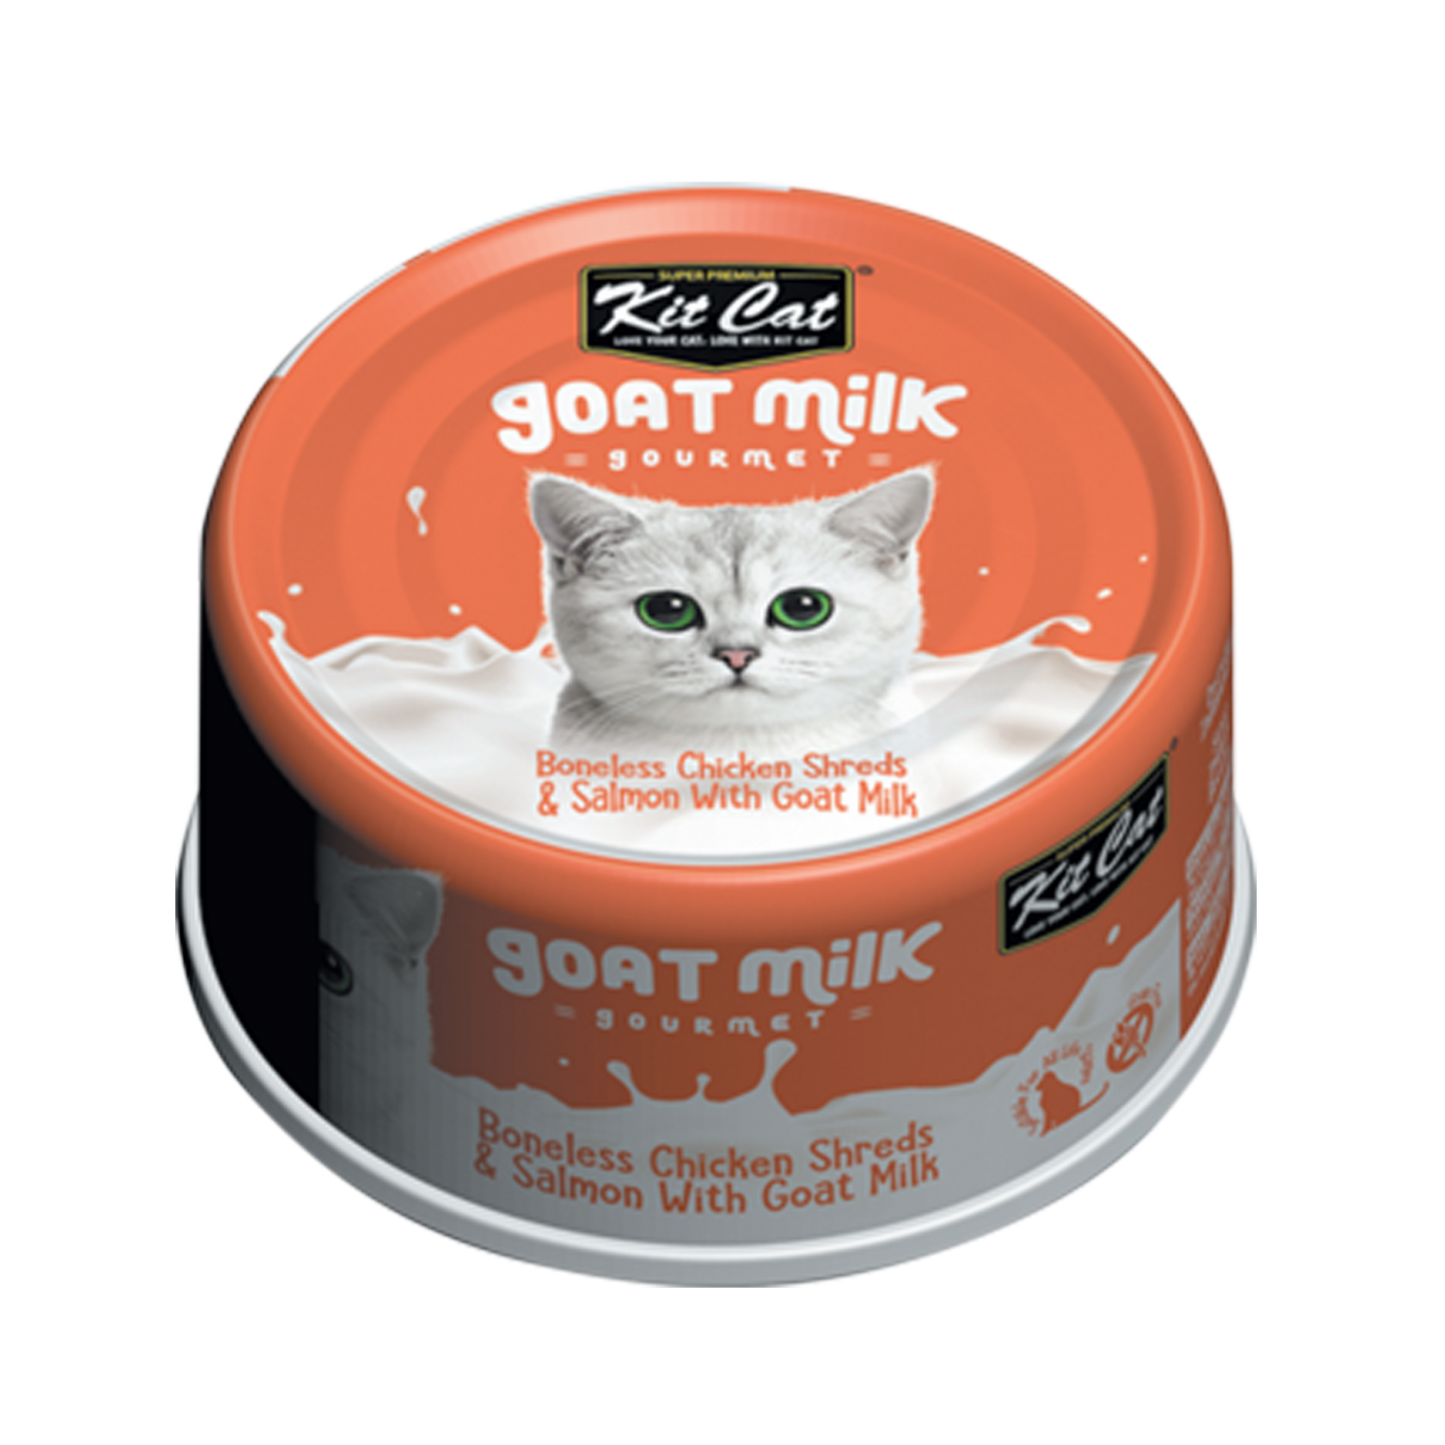 Kit Cat Boneless Chicken Shreds & Salmon With Goat Milk